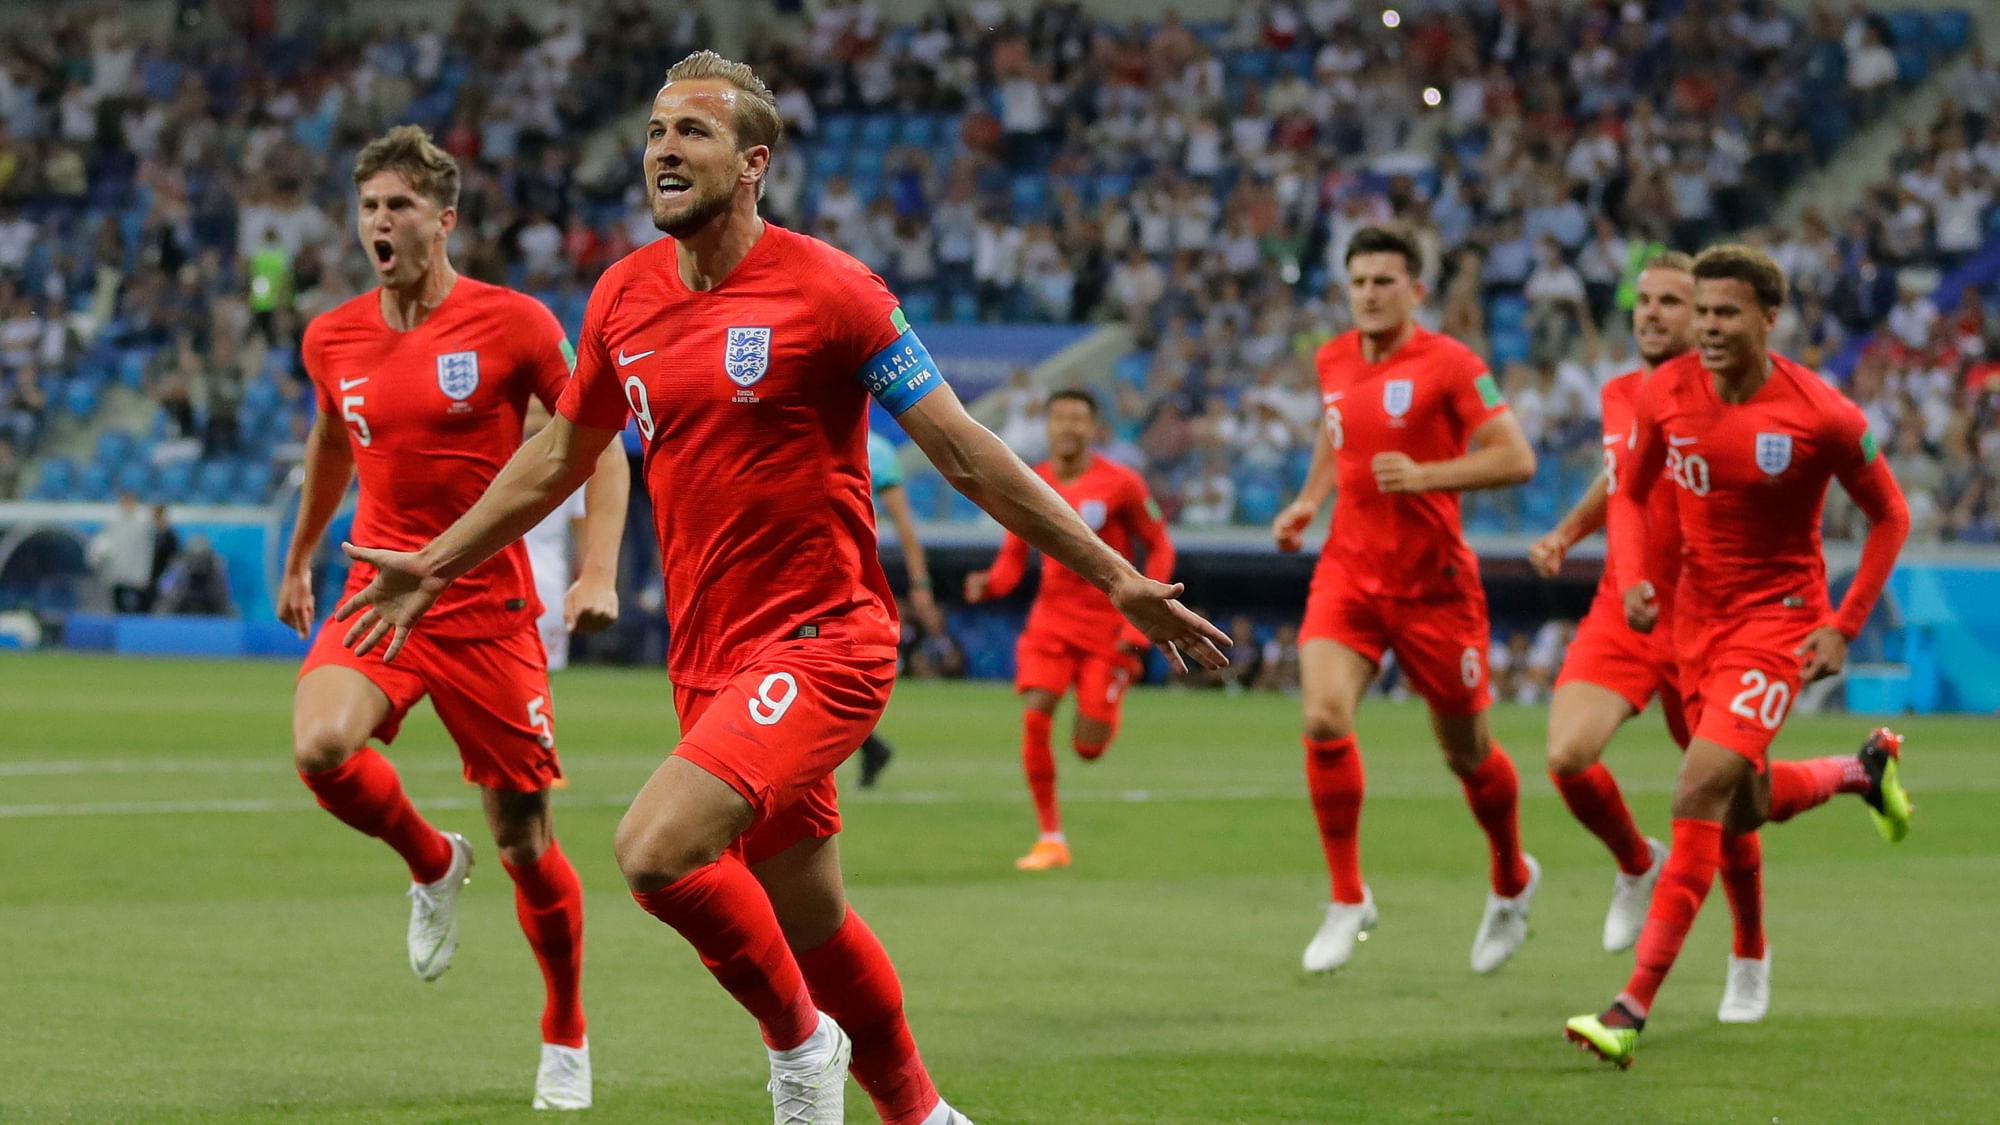 England captain Harry Kane hailed their 2-1 victory over Tunisia as “massive”.